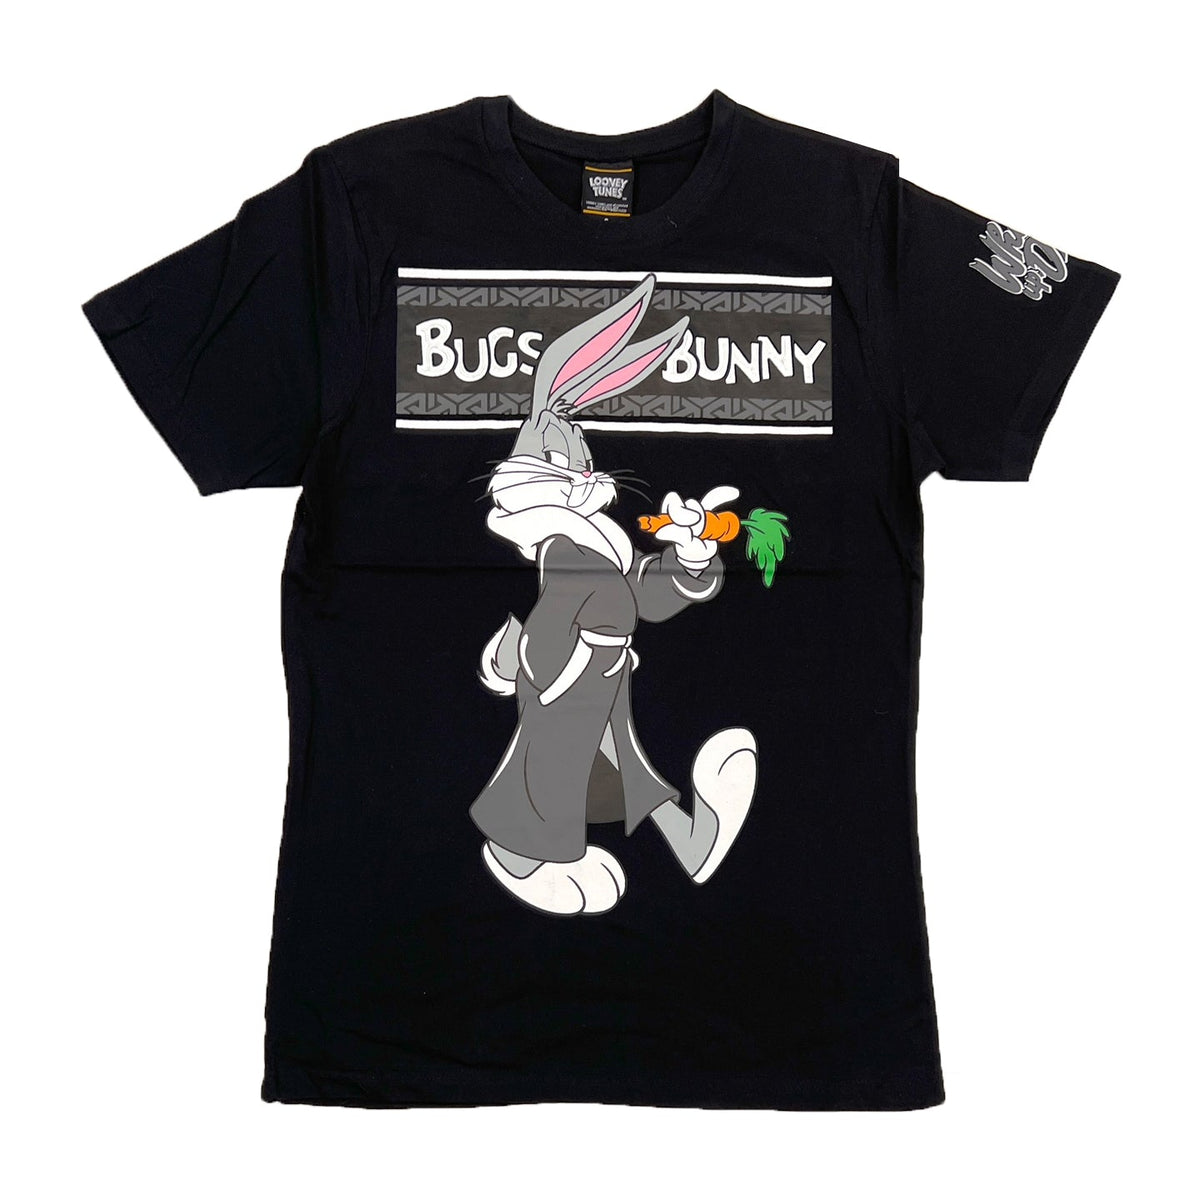 Looney Tunes Bugs Bunny Tee (Black) / $16.99 2 for $30